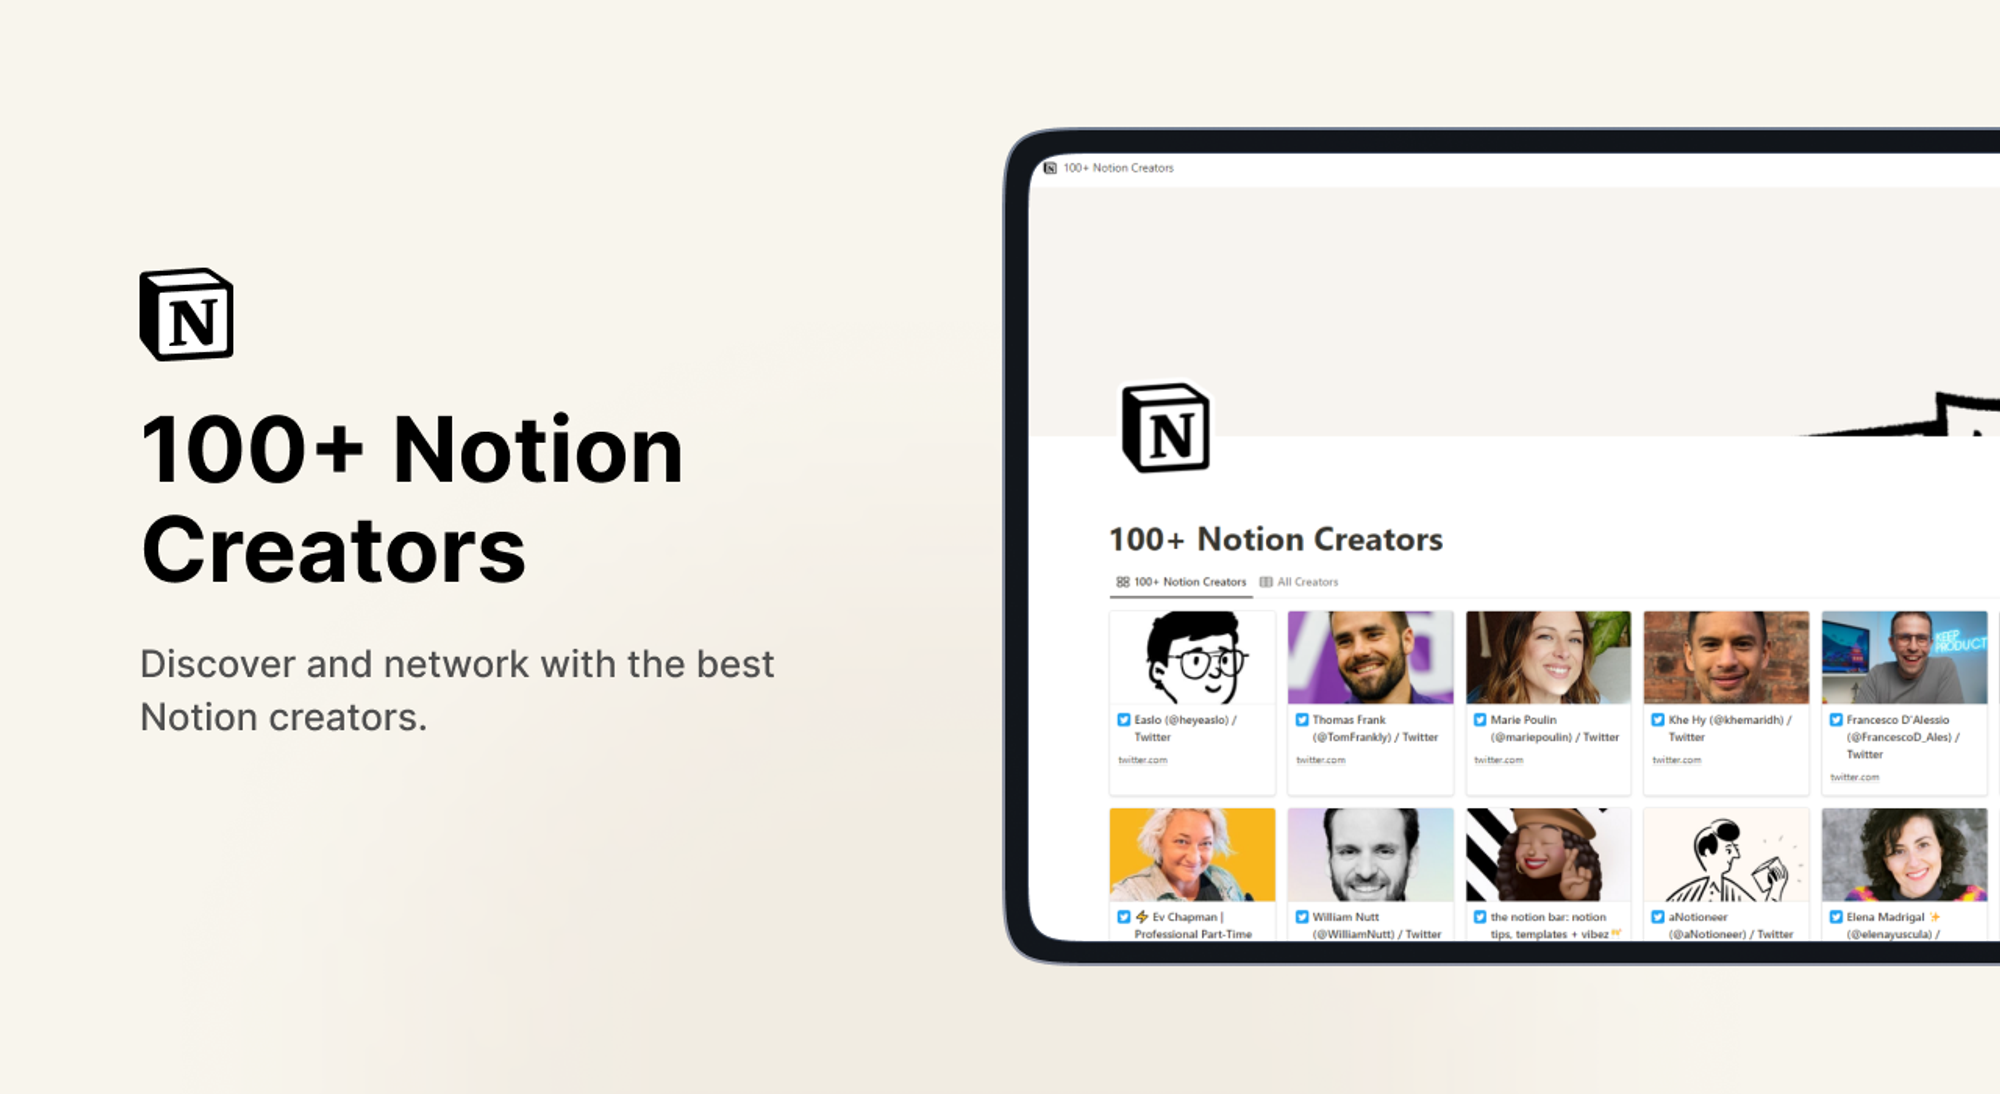 100+ Notion Creators Cover.png